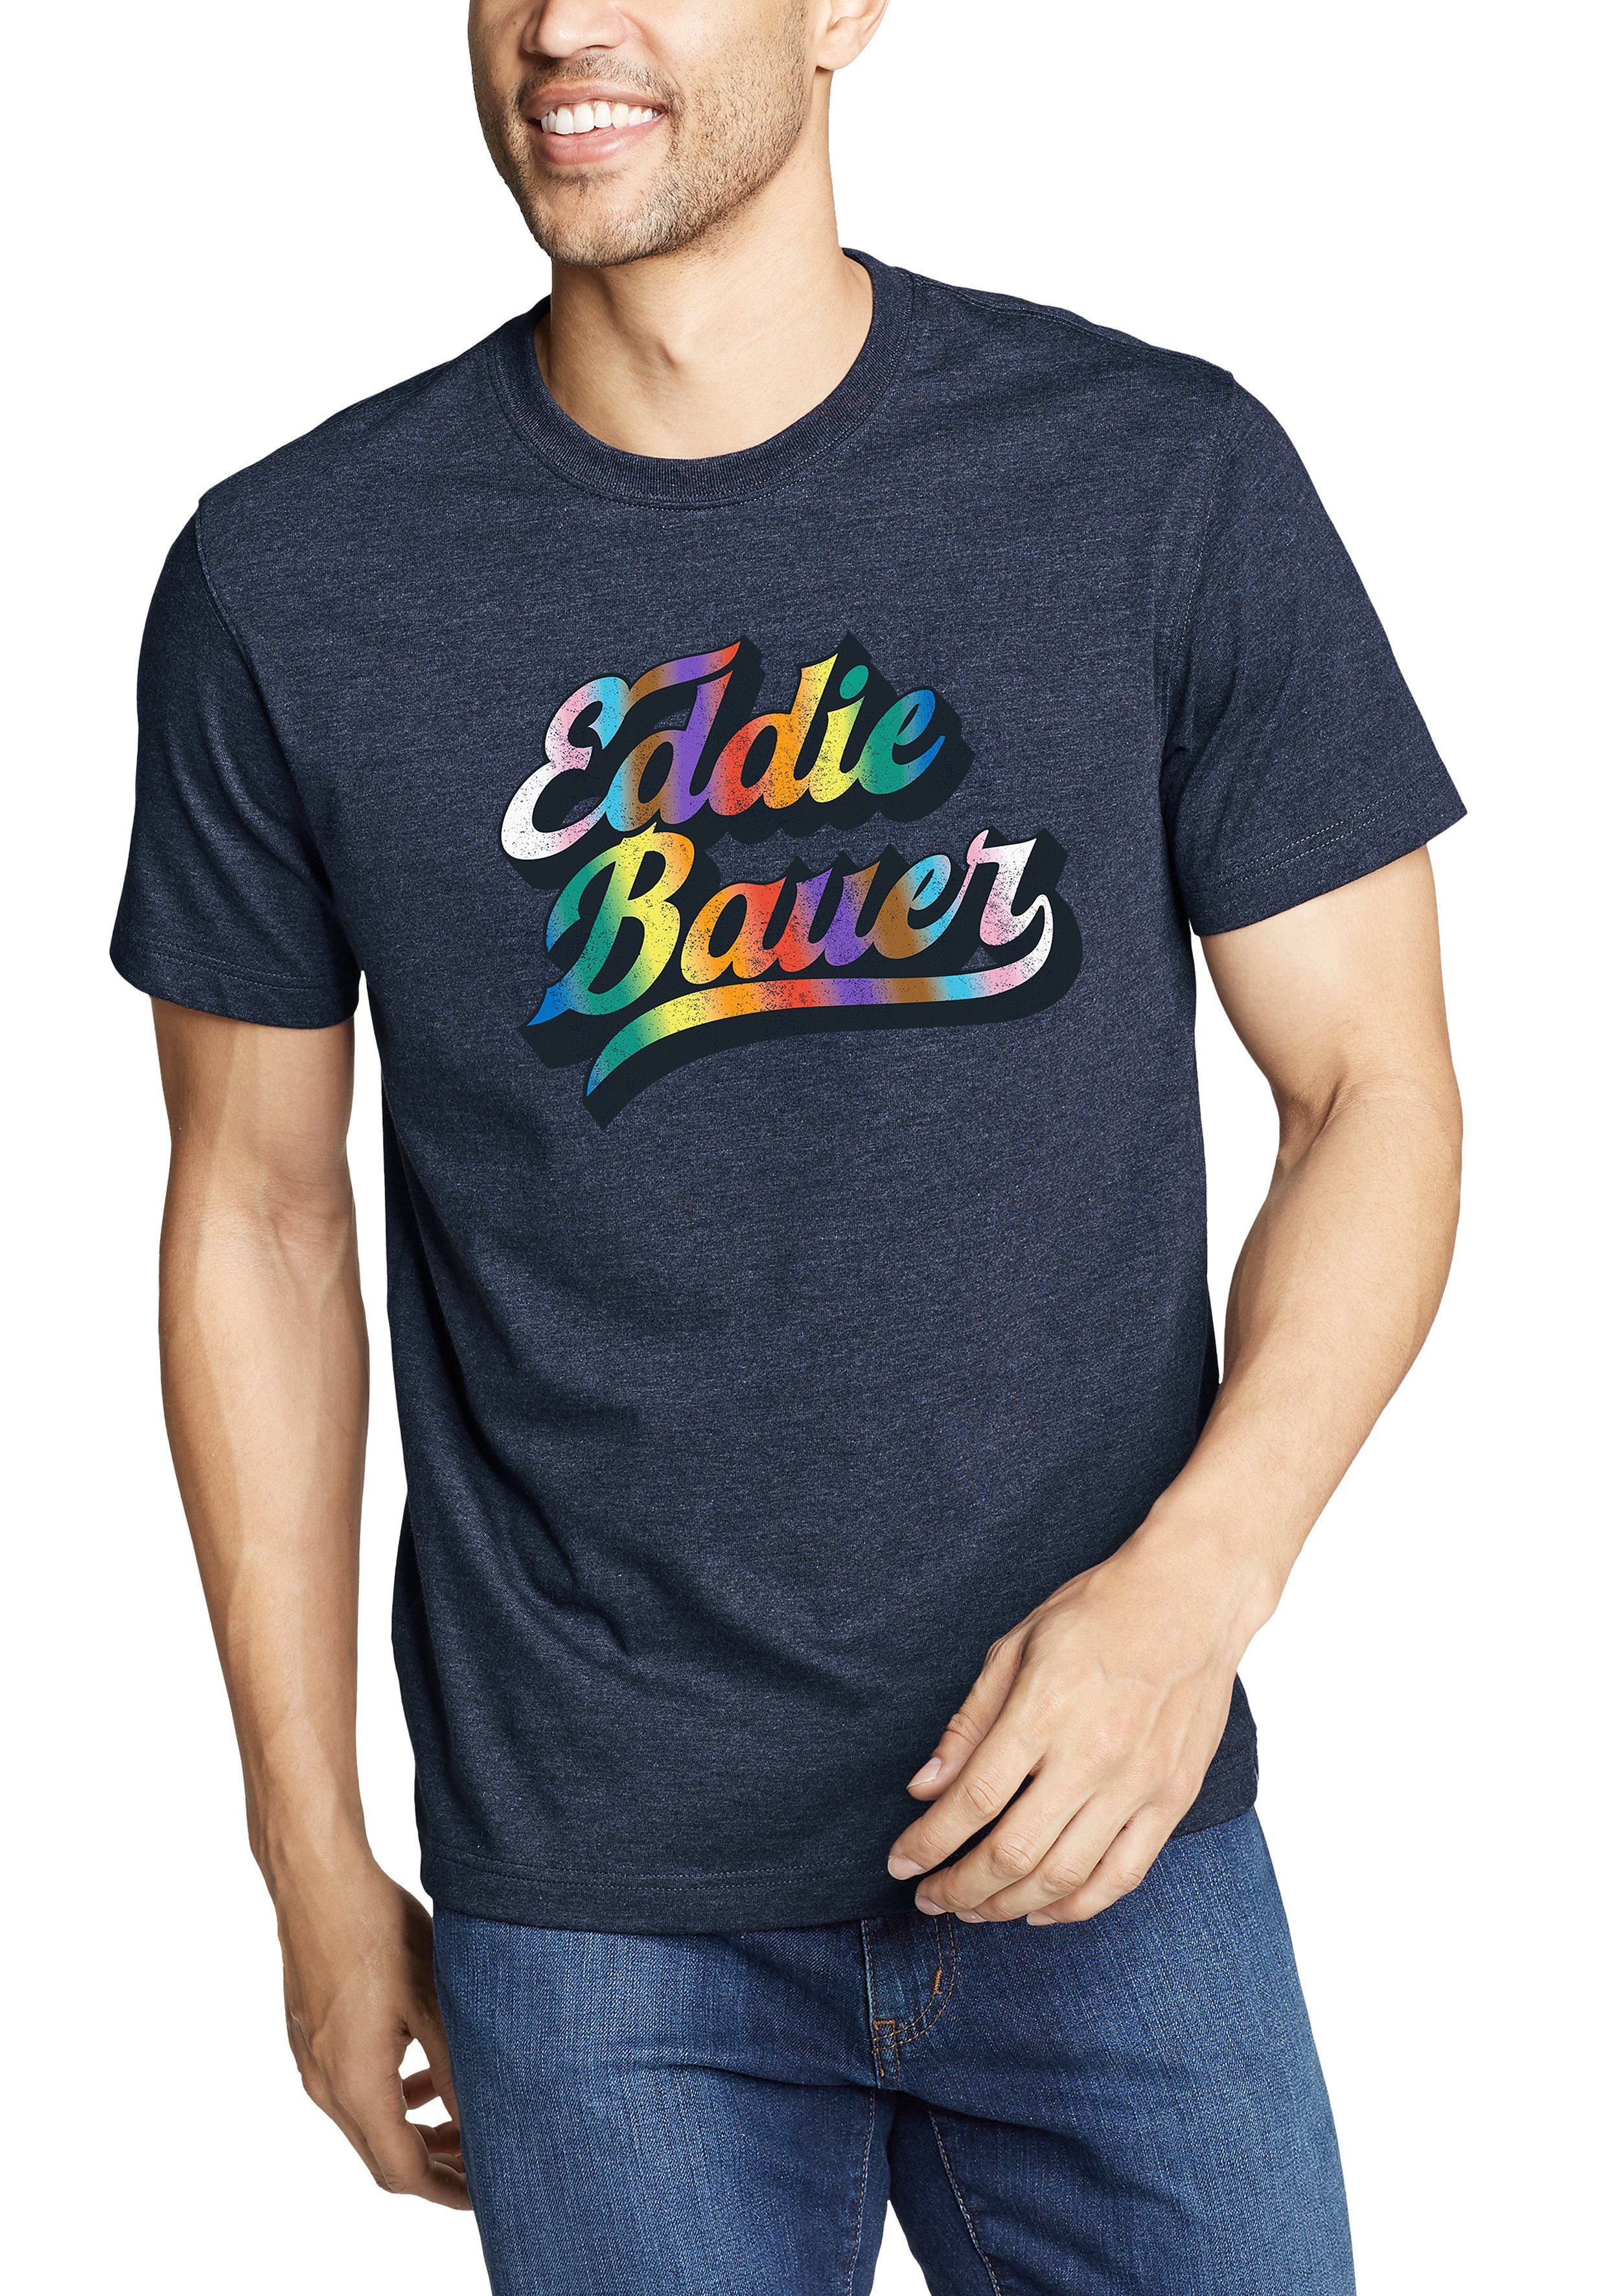 Eddie Bauer T-Shirt Graphic T-Shirt All Inclusive